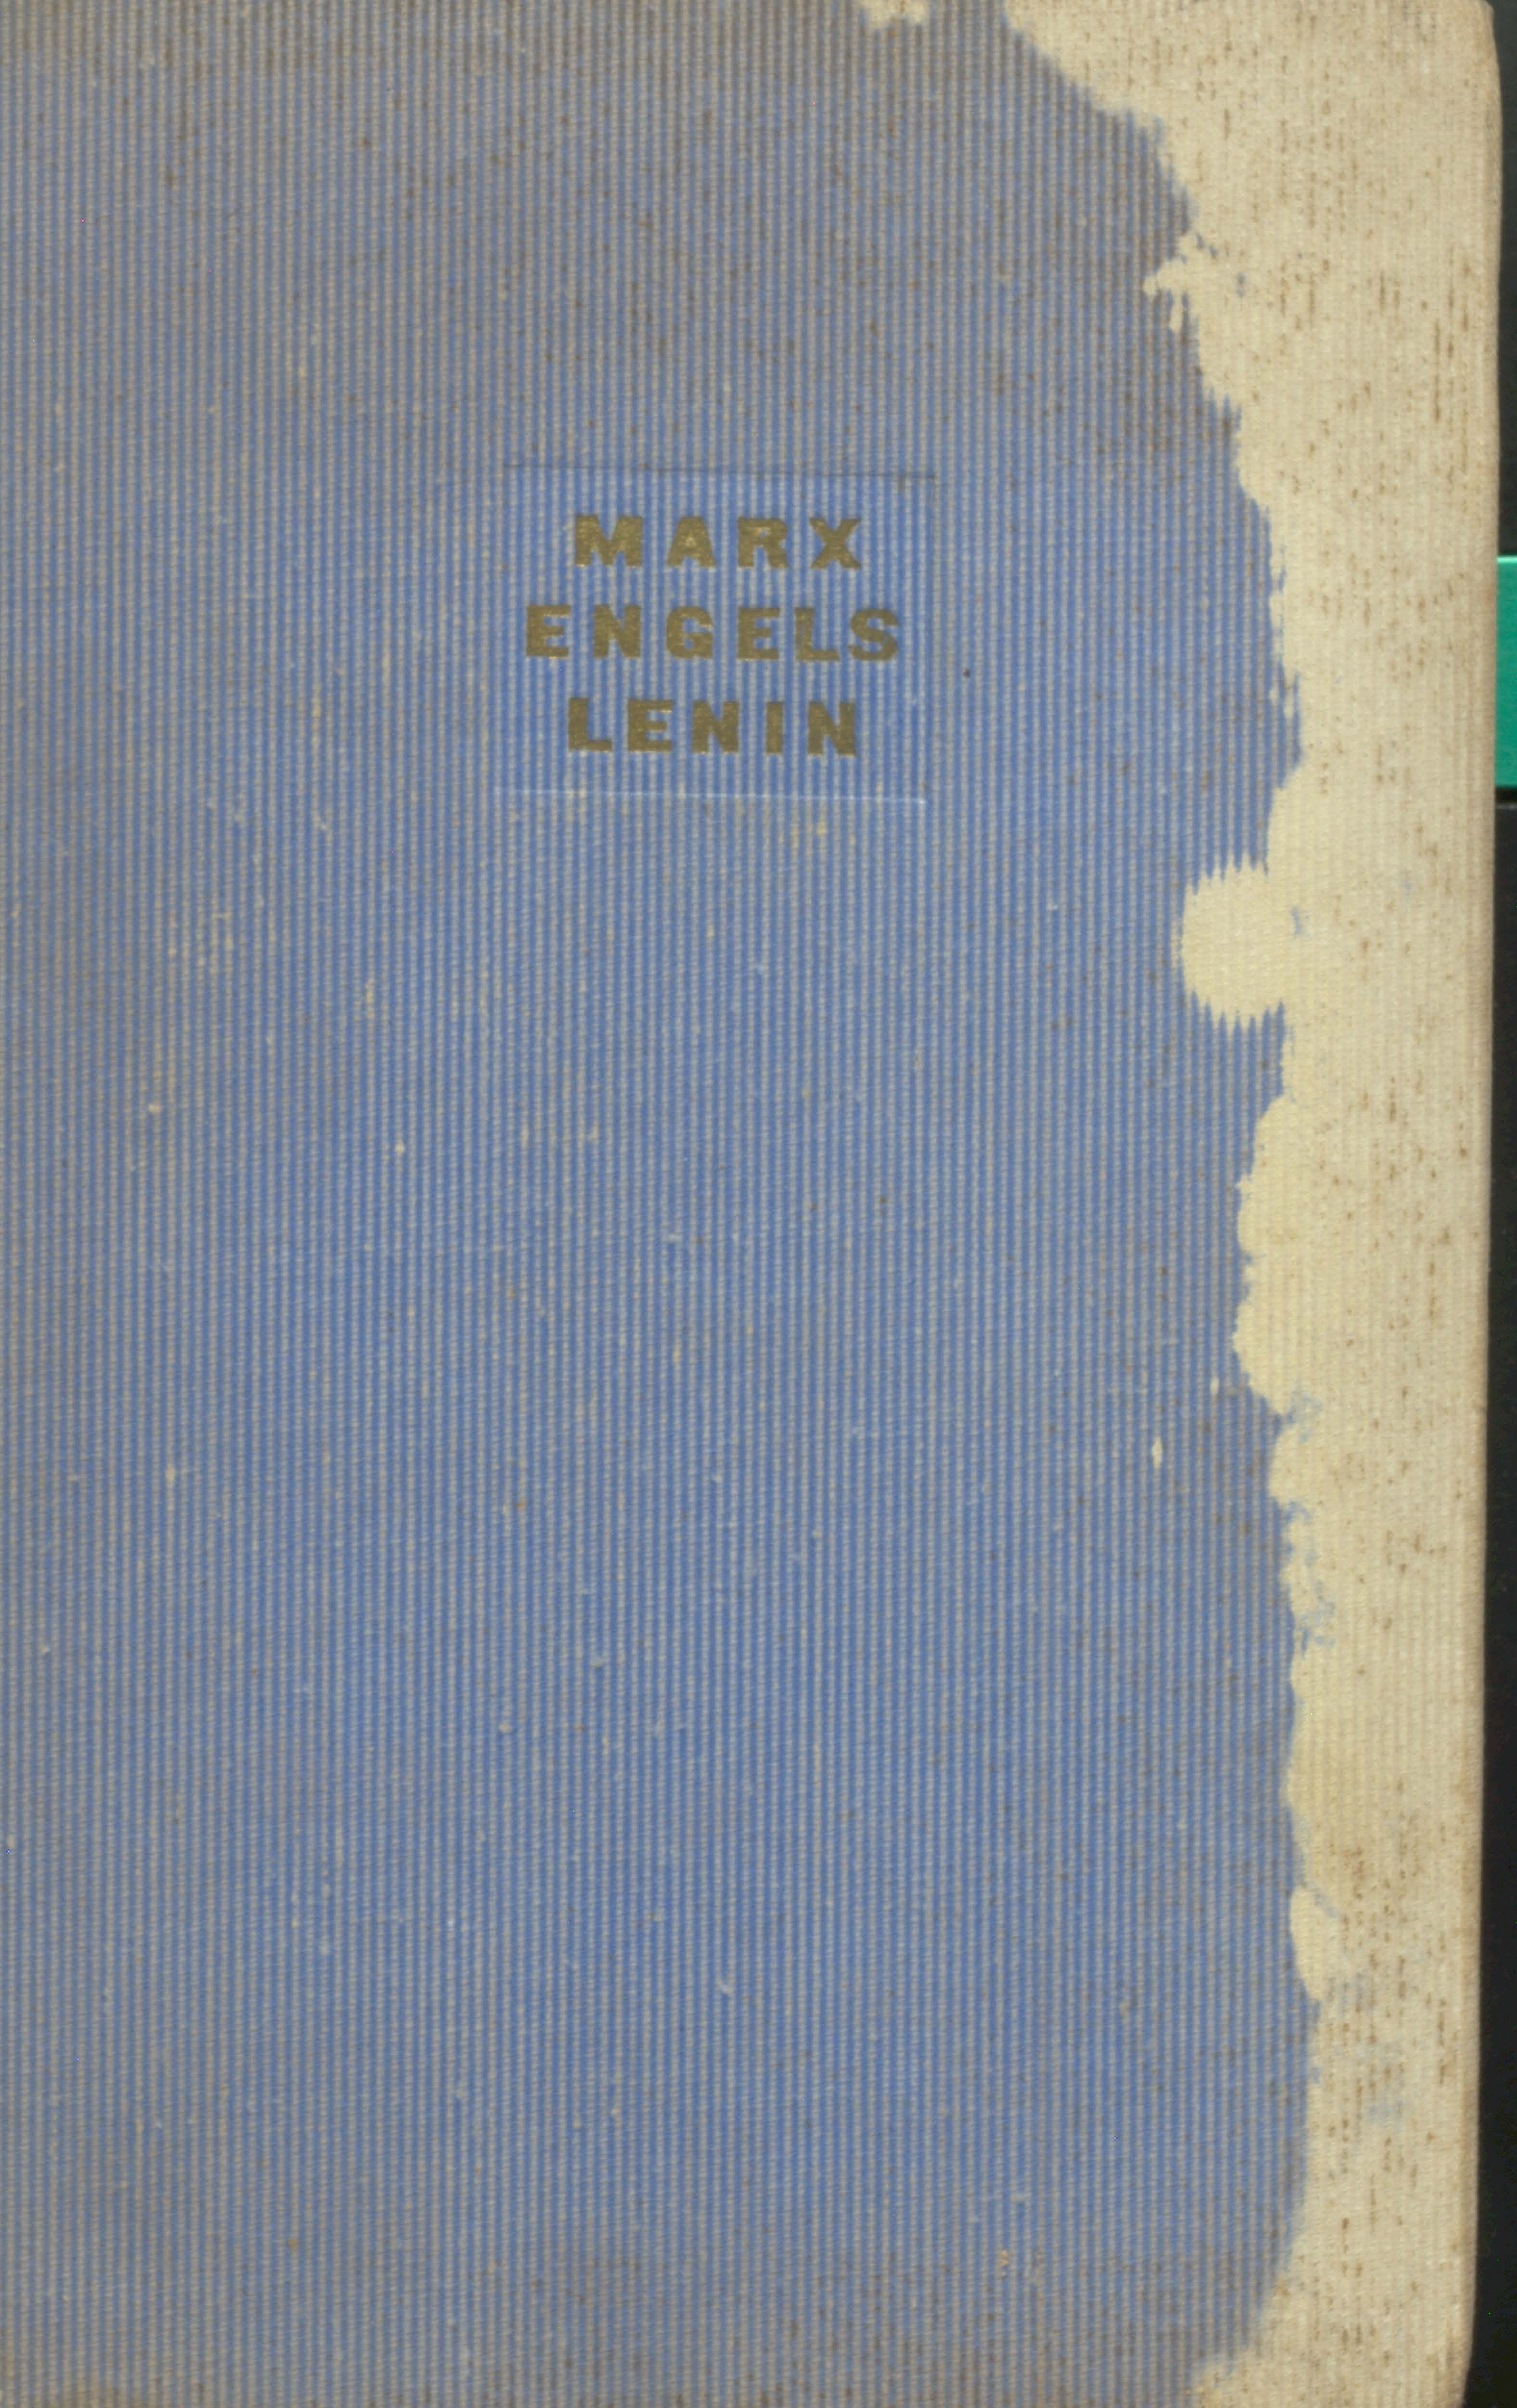 K.MARX, ENGELS,V.I. LENIN on scientific communism